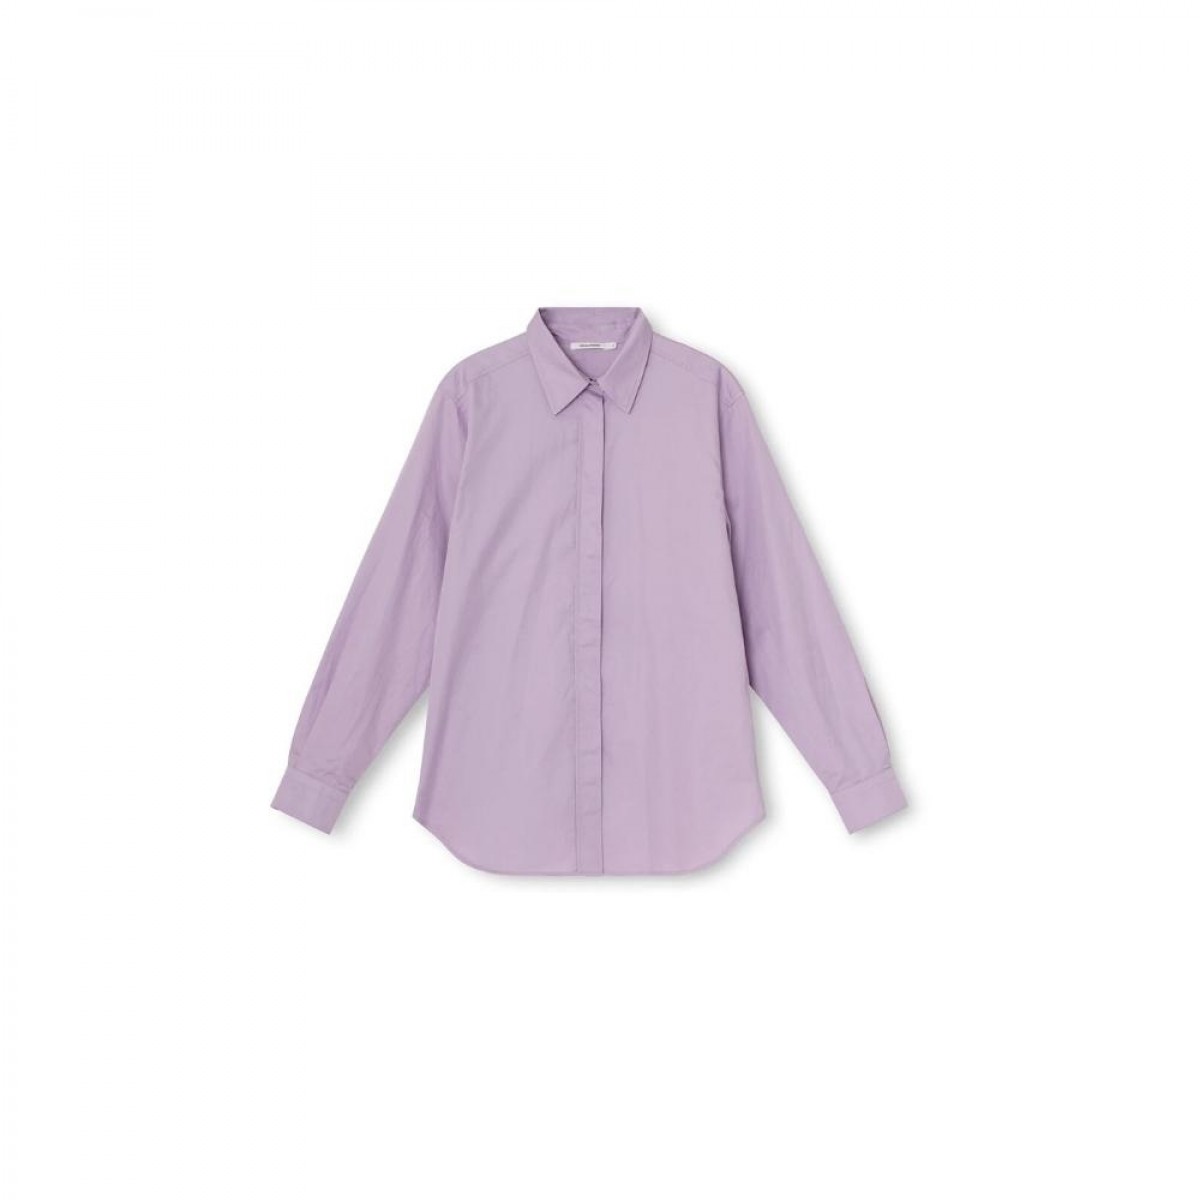 ebba shirt - lavender - front